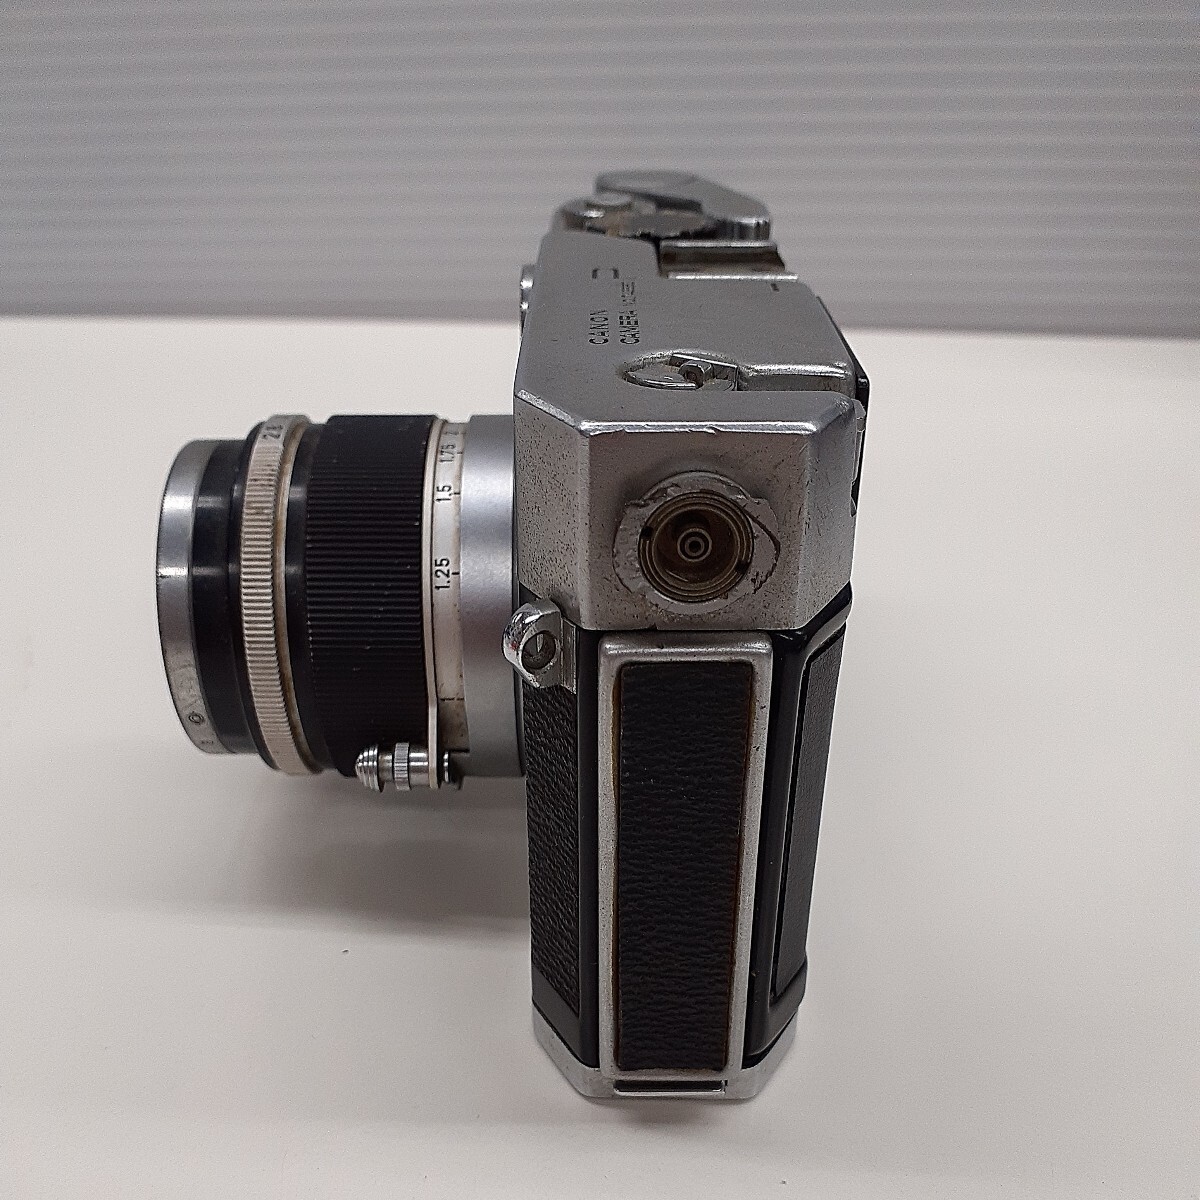 Canon camera P Canon range finder film camera body lens LENS 50mm F2.8.